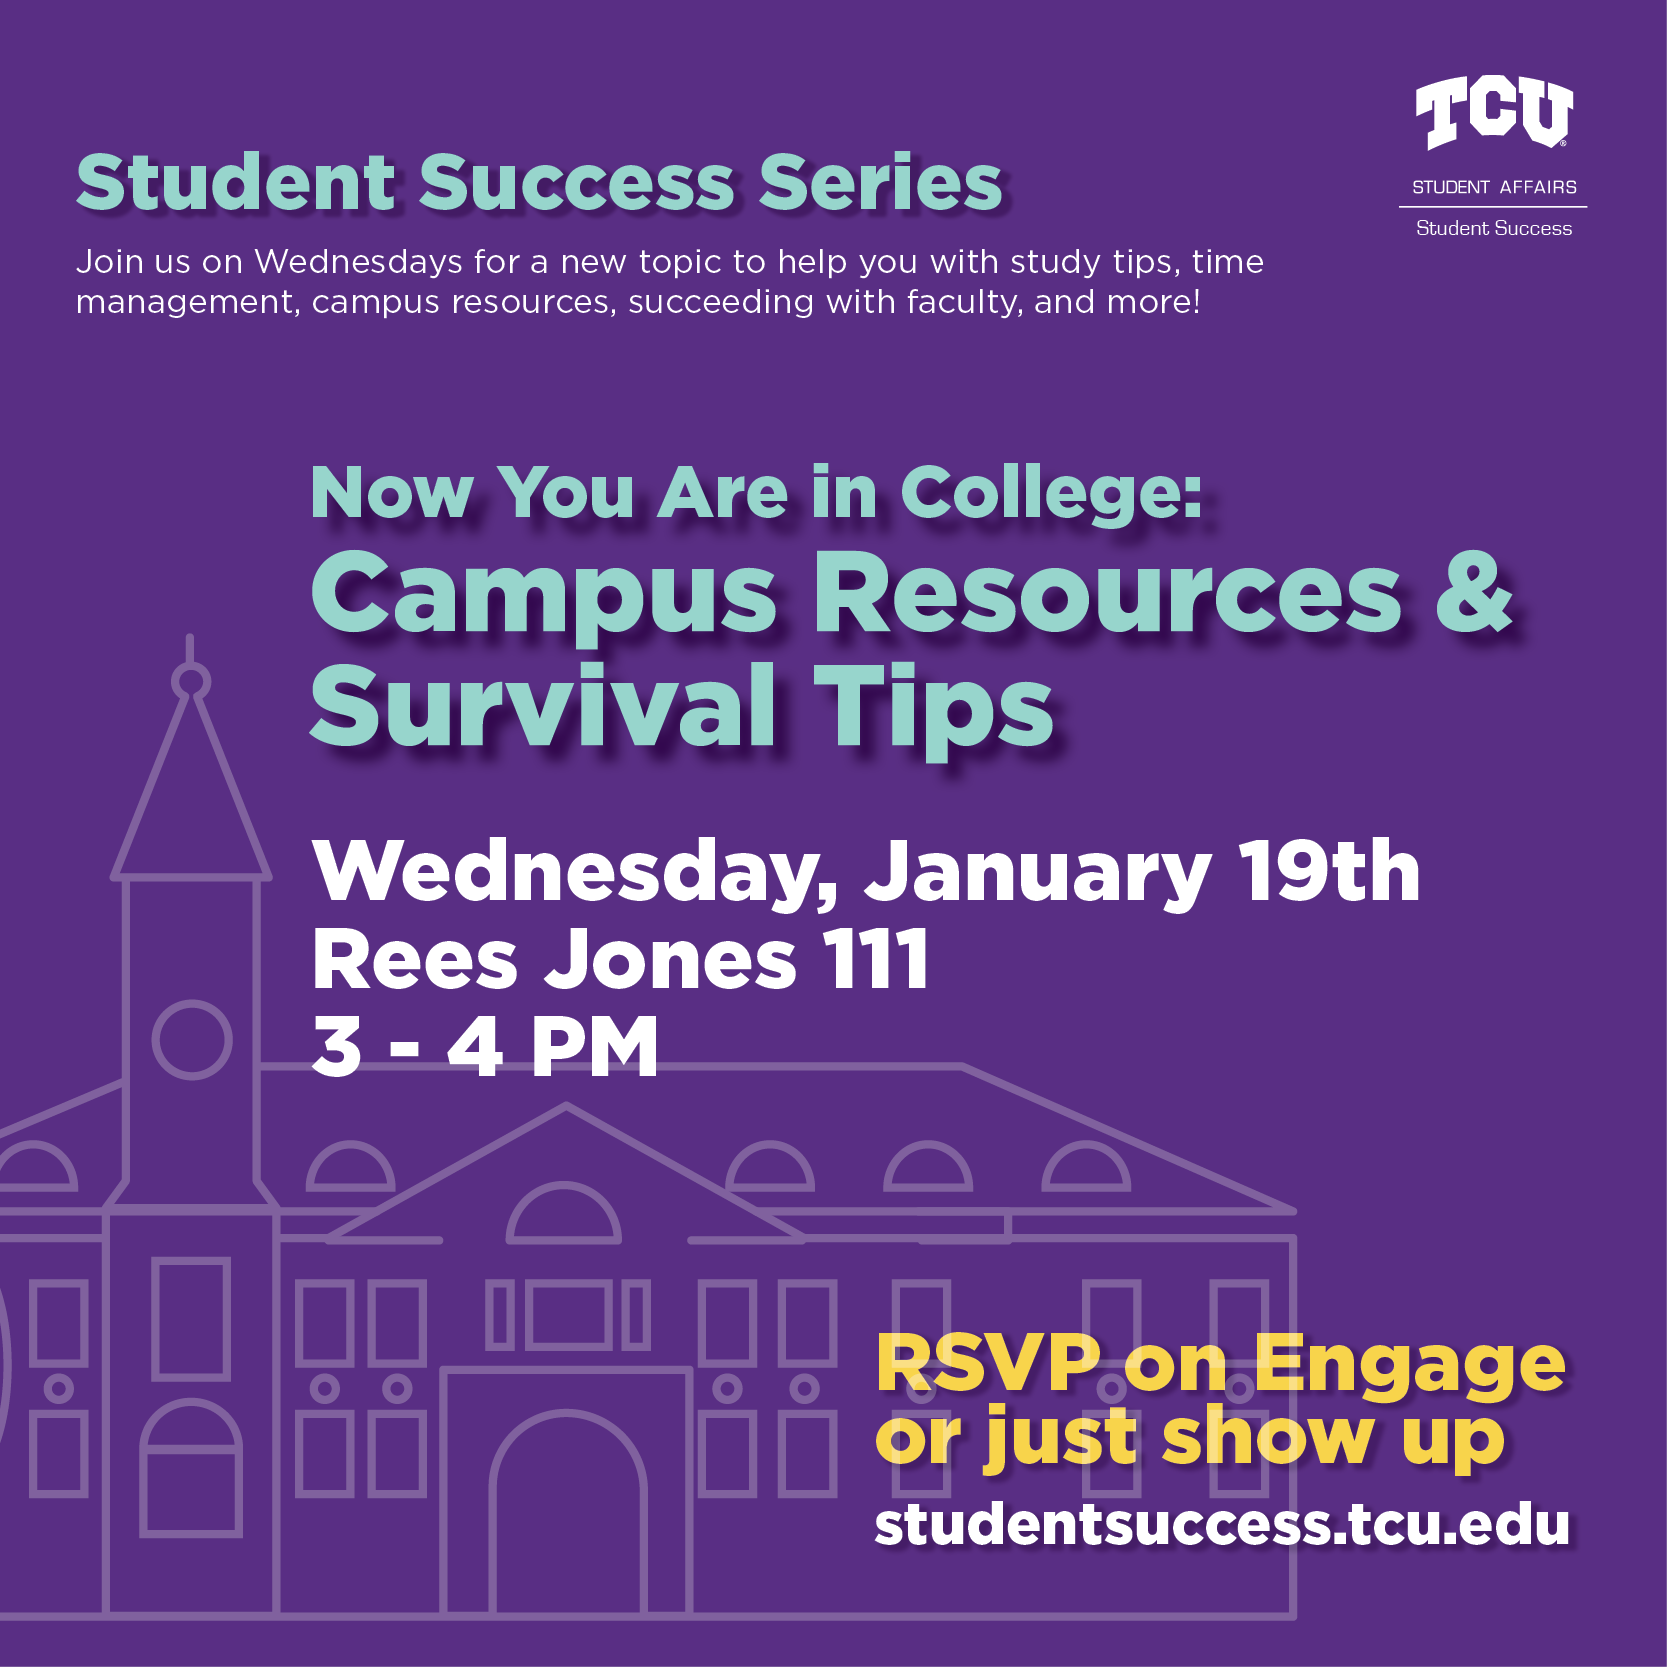 Student Success Series: Campus Resources & Survival Tips